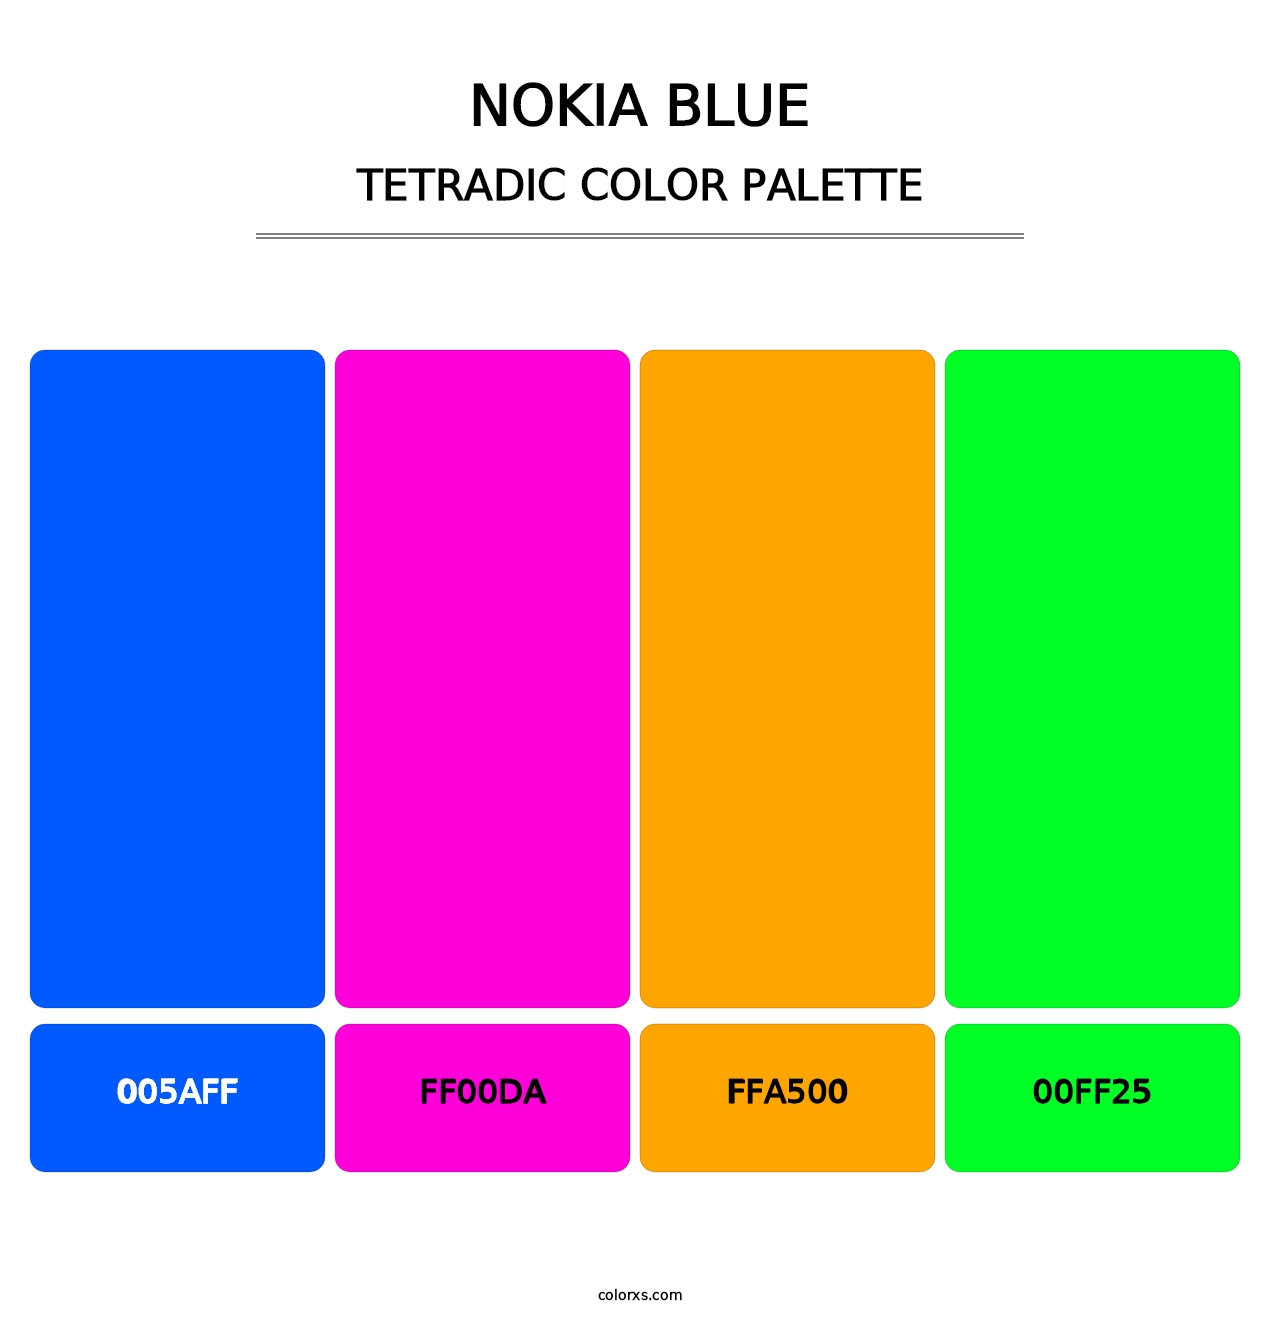 Nokia Blue - Tetradic Color Palette